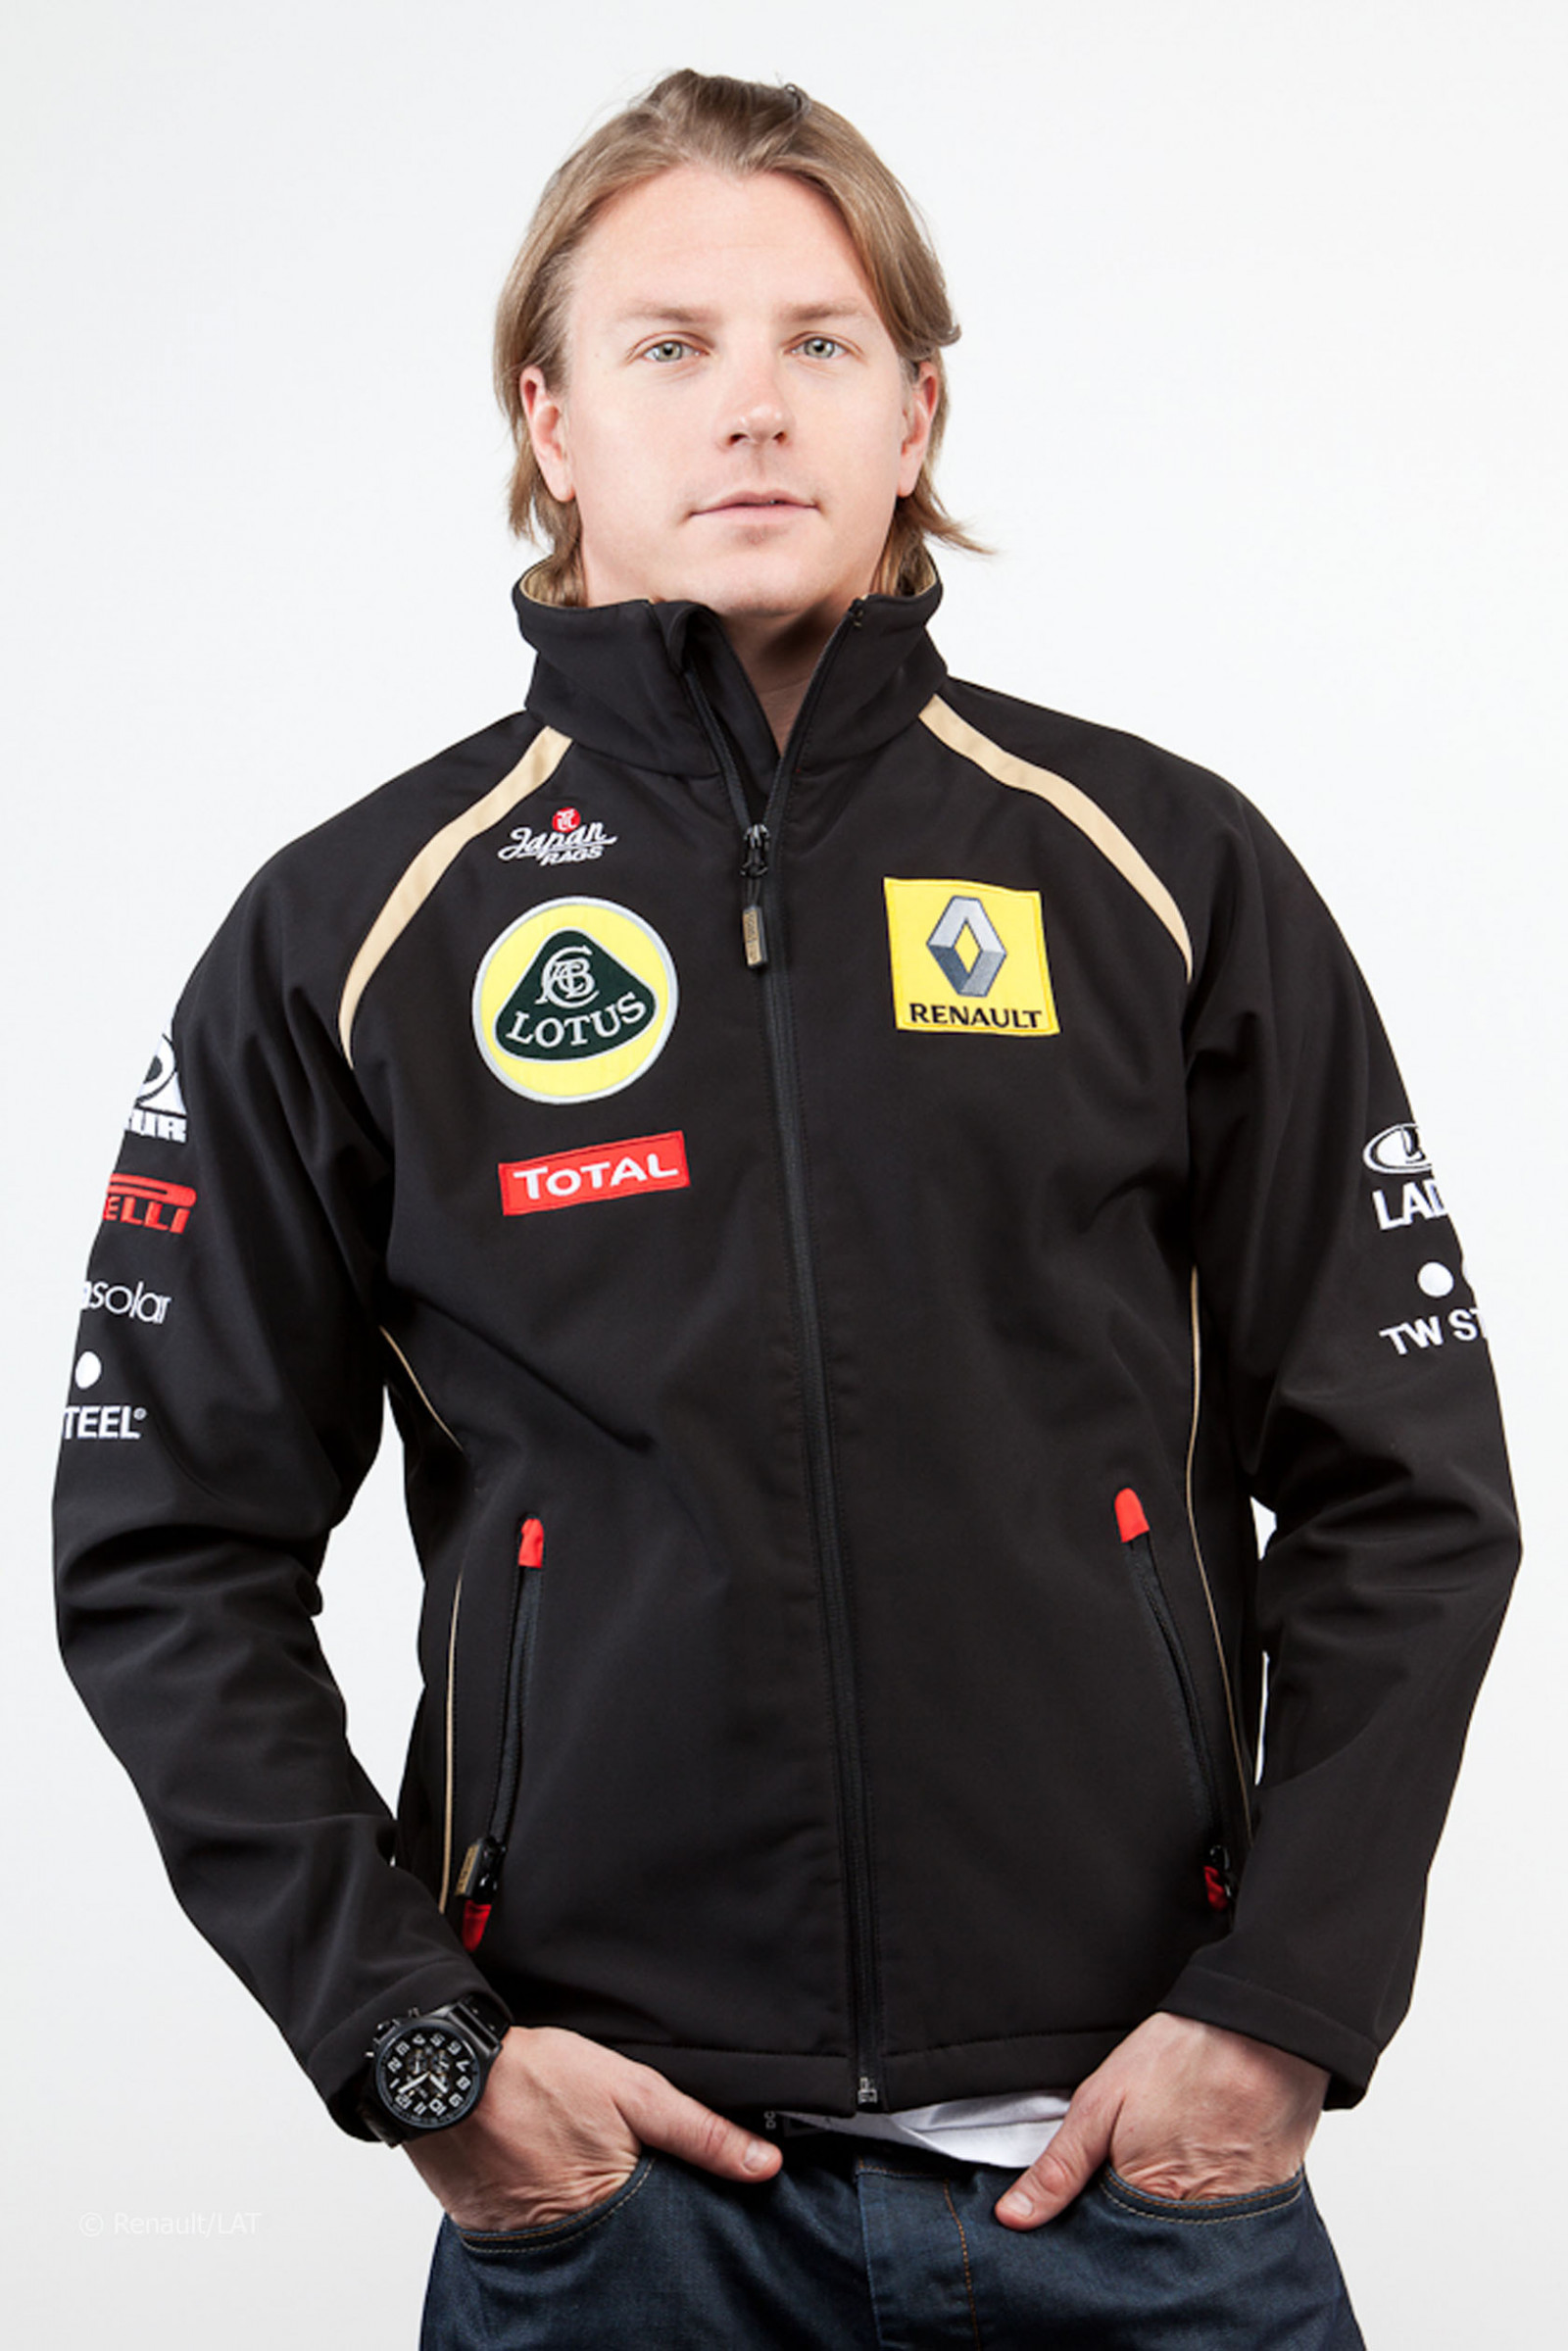 Кими Райкконен (Kimi Raikkonen)